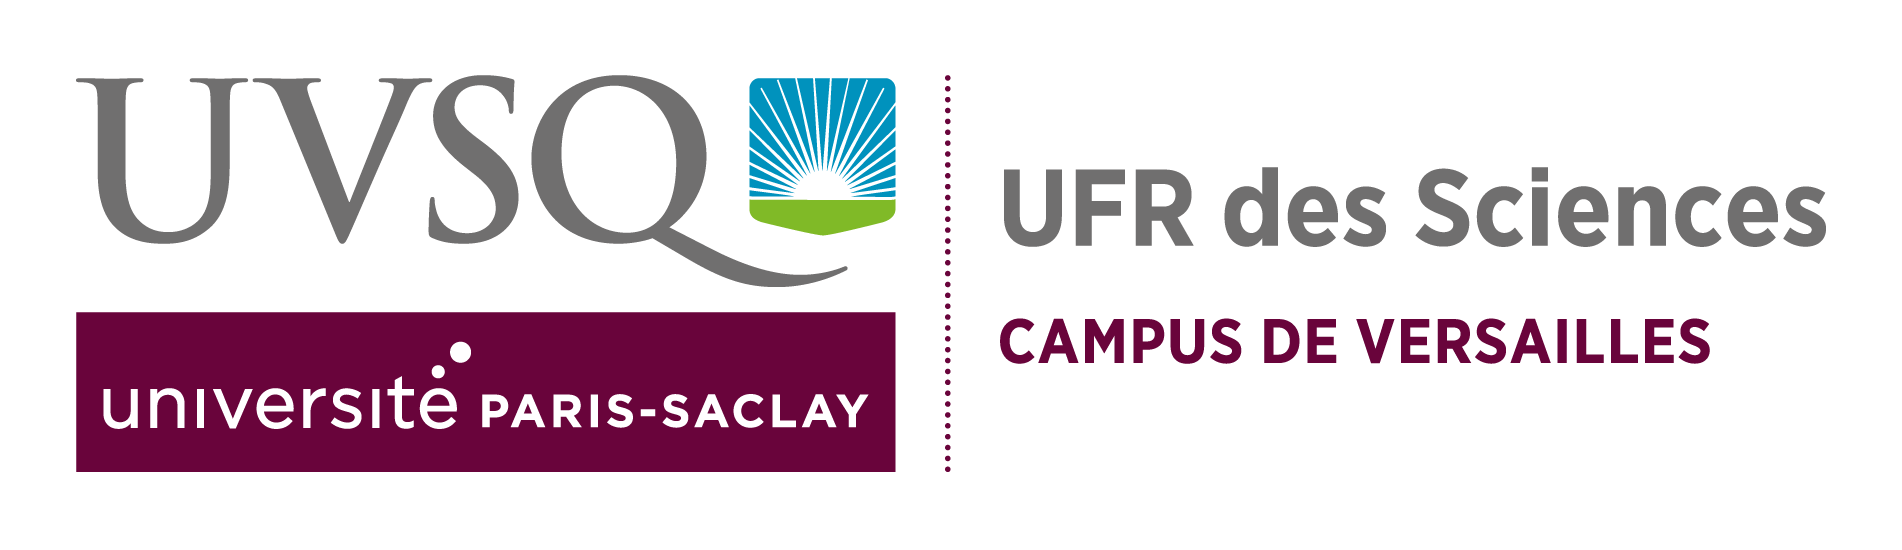 logo-UFR des sciences